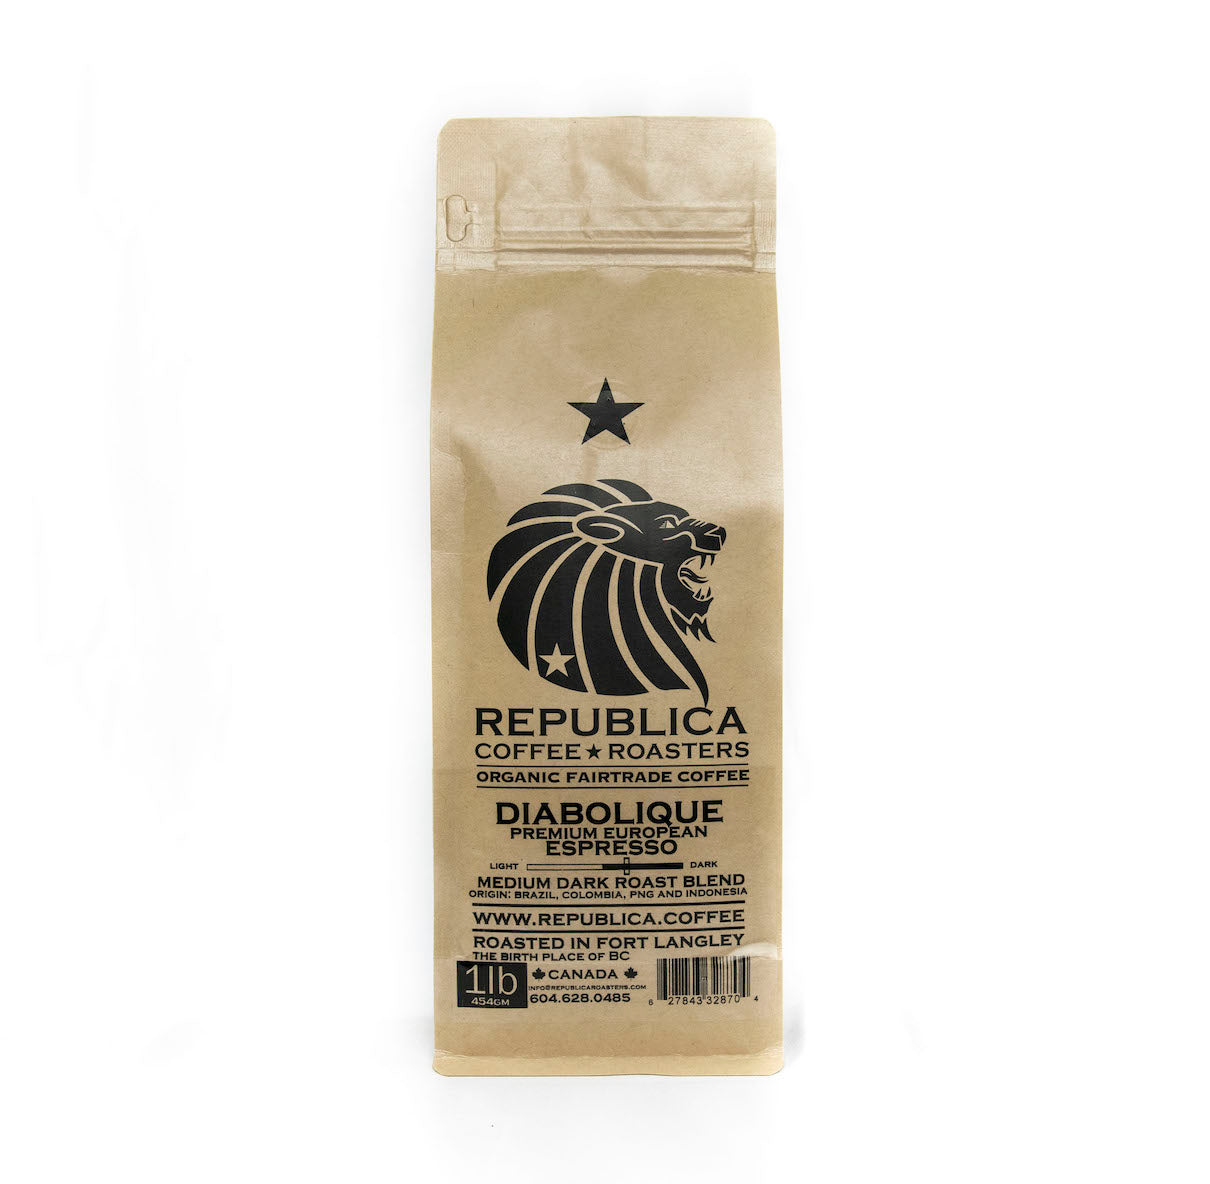 Republica Coffee Diabolique The CoffeeGenius